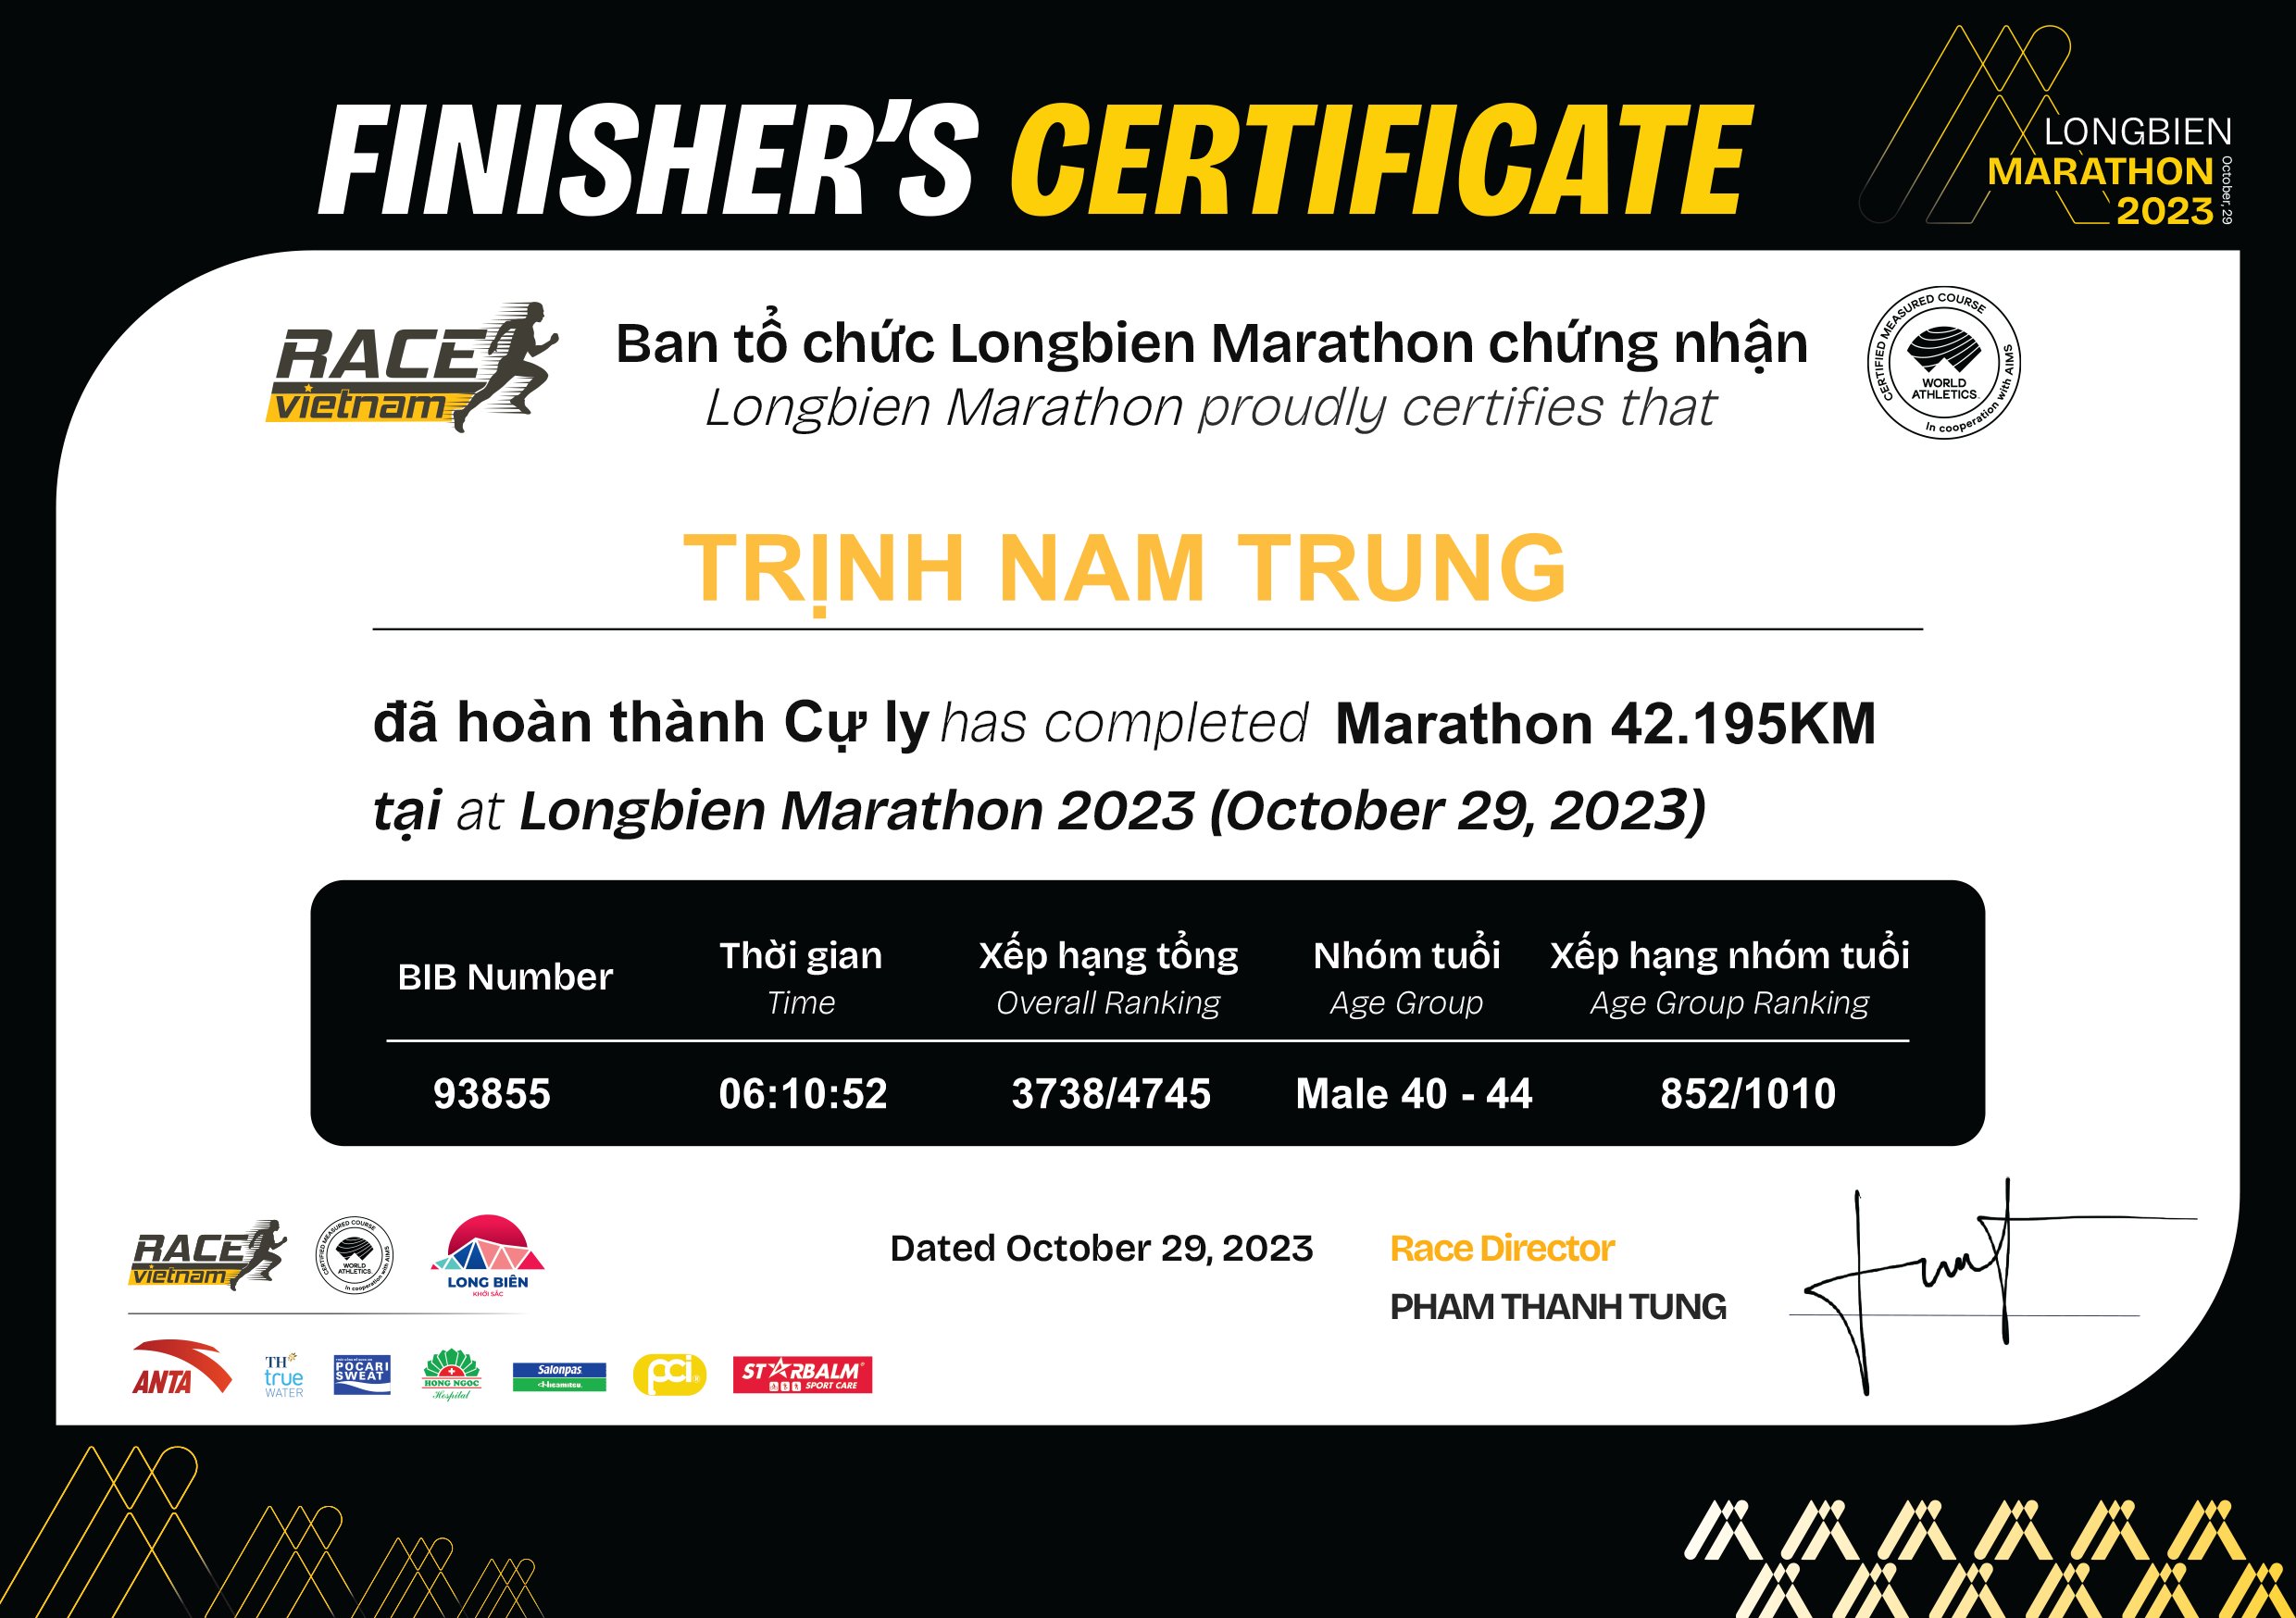 93855 - Trịnh Nam Trung